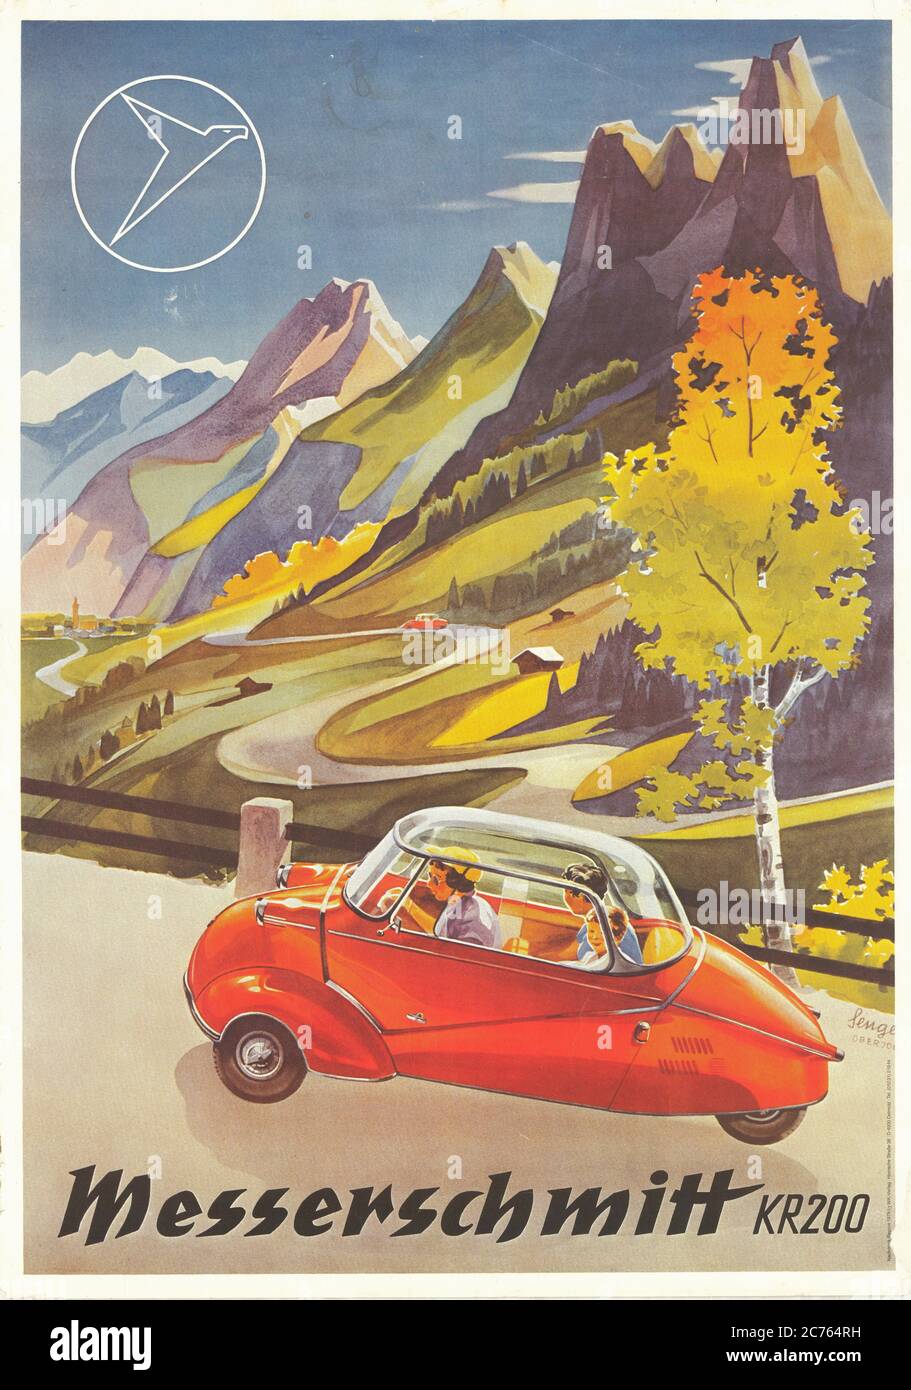 Alte Werbung Von Einem Messerschmitt Kabine Roller en 1955 - Publicité de voitures anciennes Banque D'Images